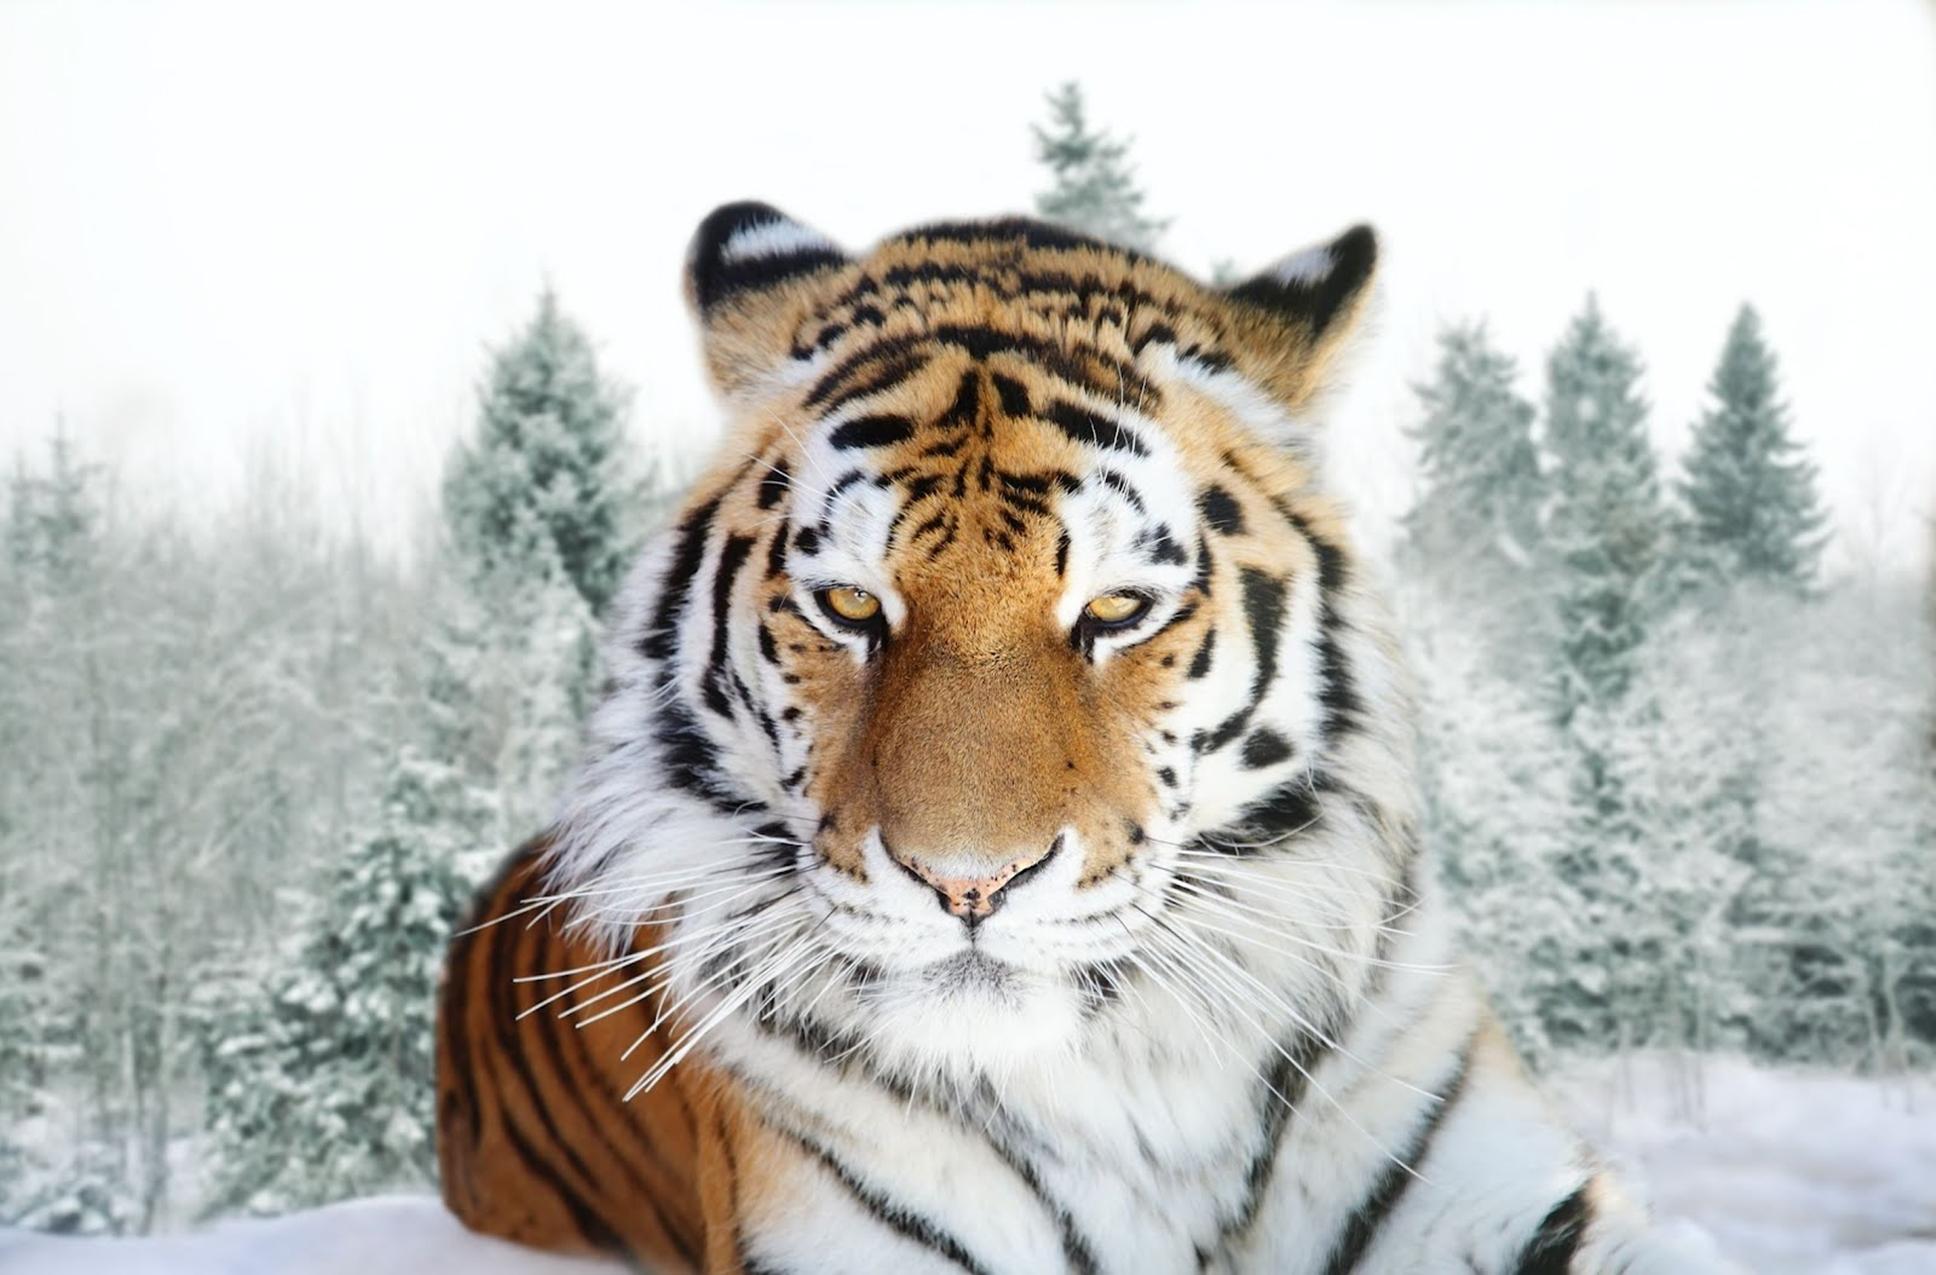 kaplan wallpaper,tigre,fauna silvestre,tigre de bengala,animal terrestre,tigre siberiano